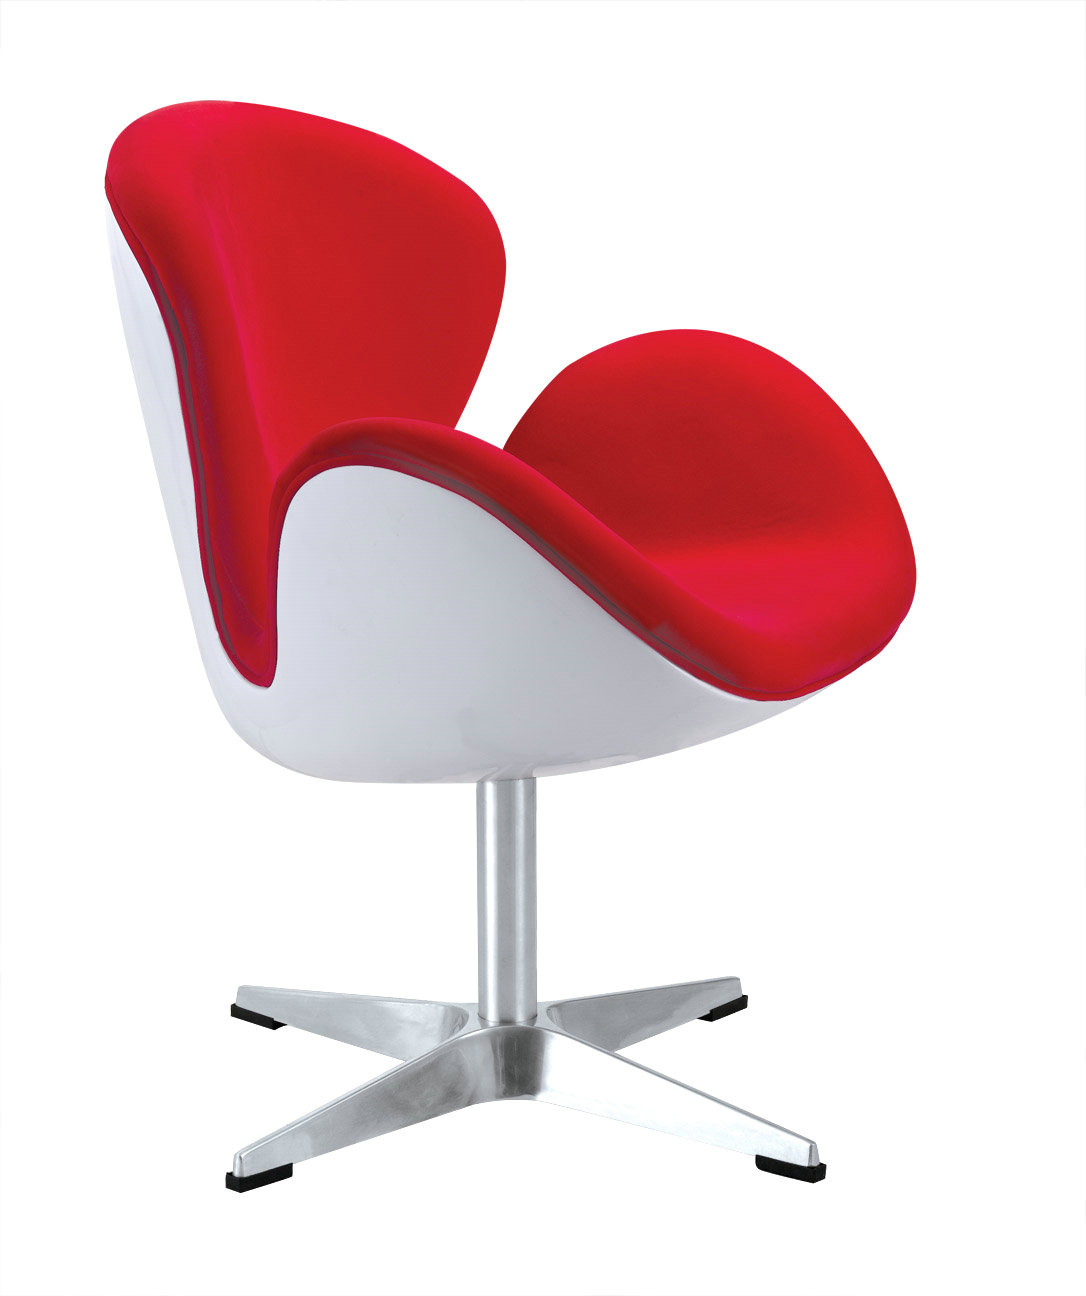 designer swan chair _ lohabour.jpg